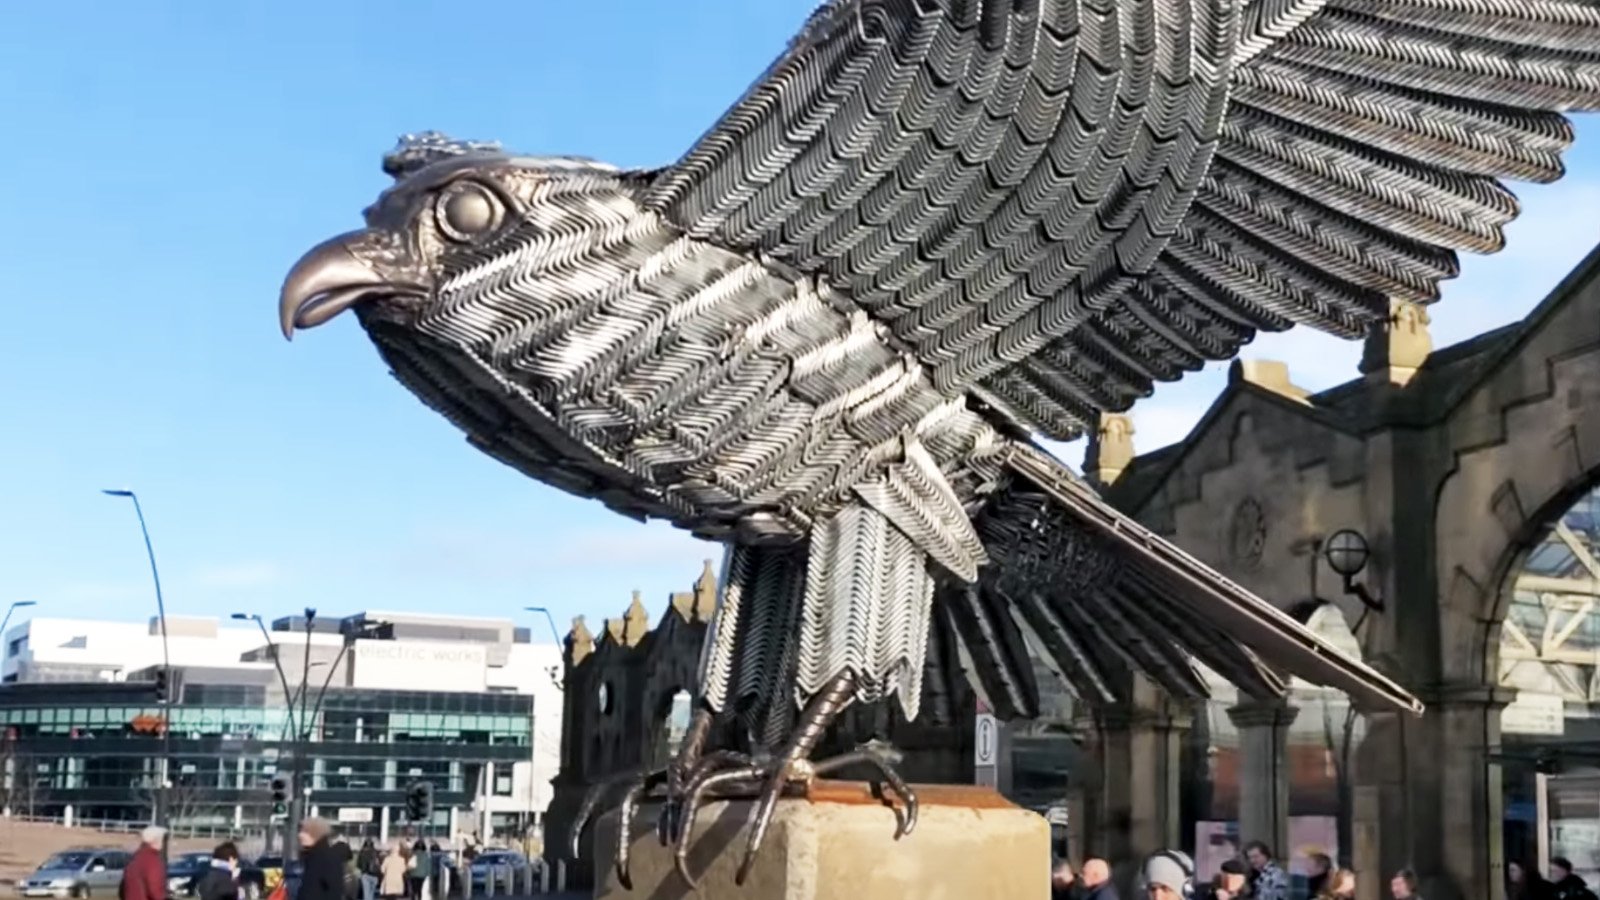 Allen the Falcon sculpture by Jason Heppenstall